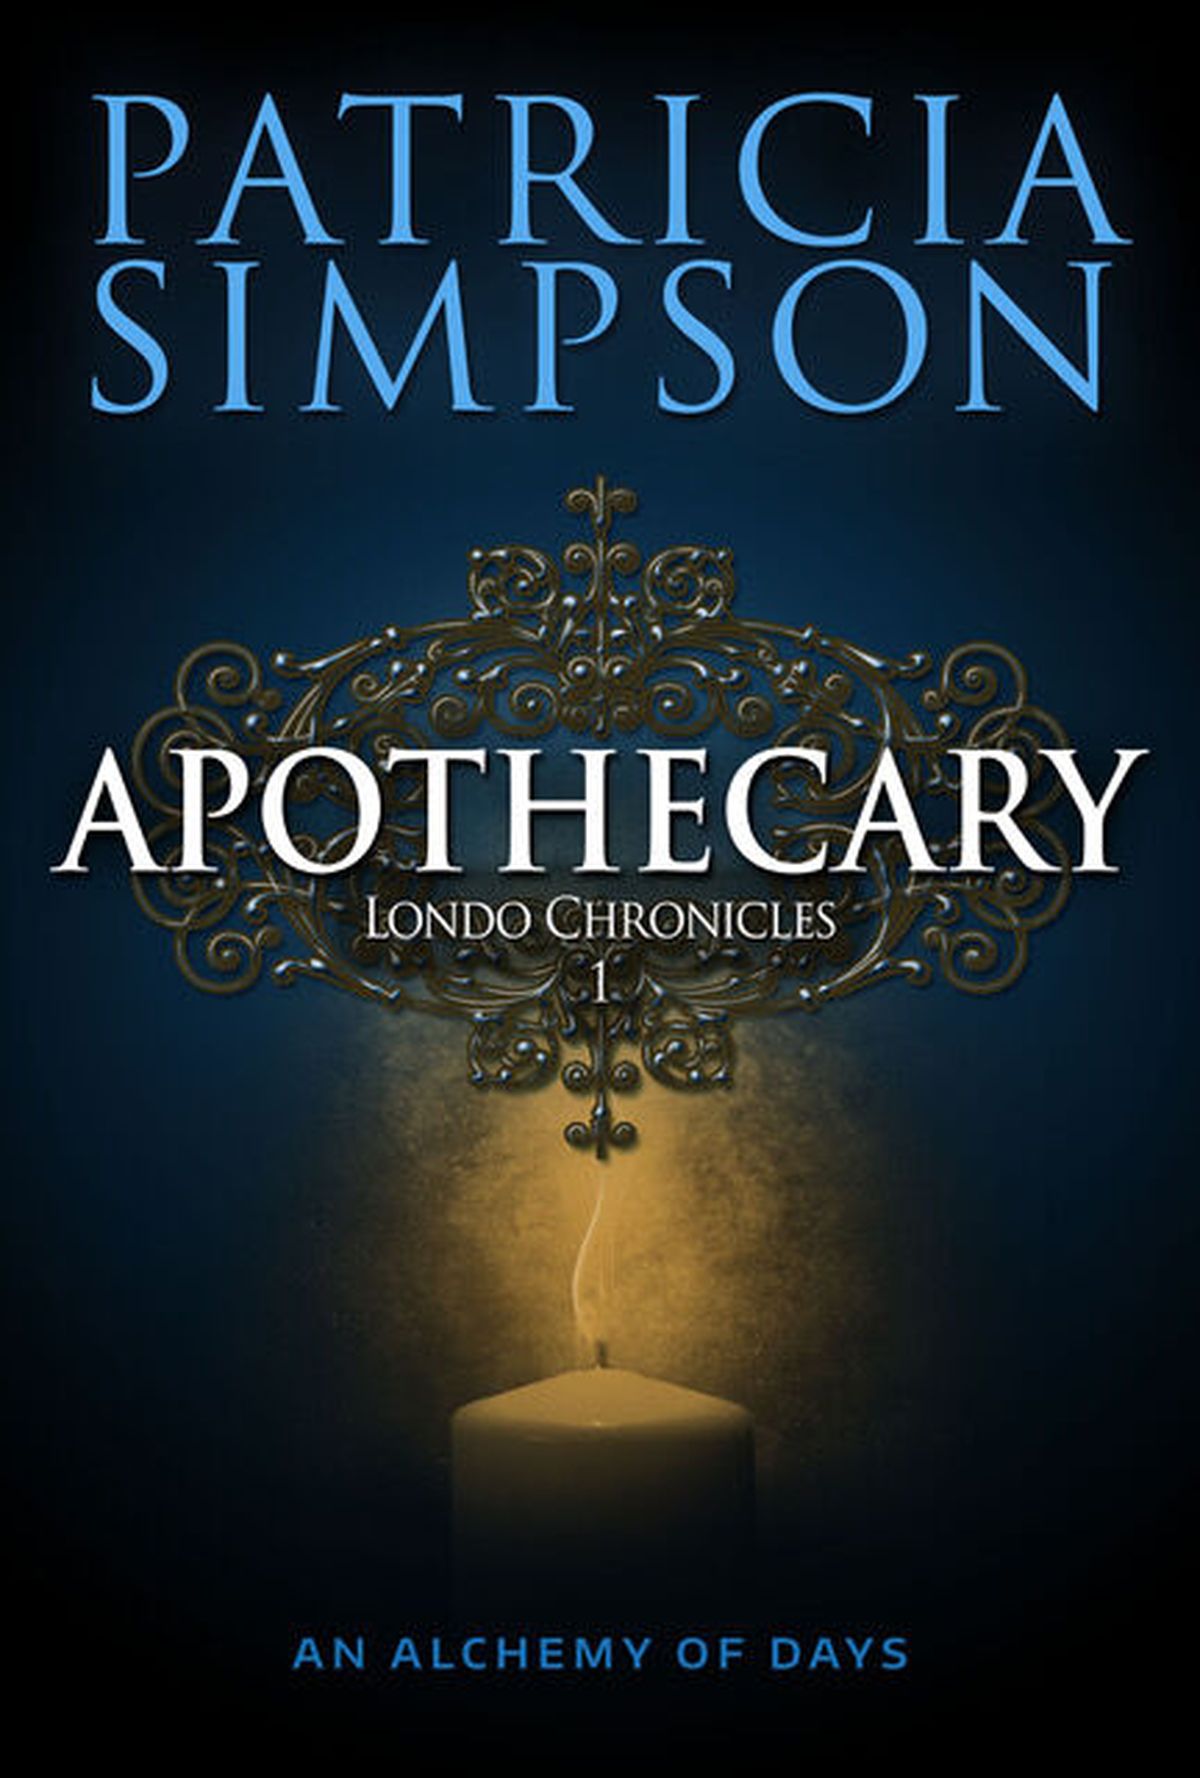 “Apothecary: Londo Chronicles” by Patricia Simpson  (Courtesy)